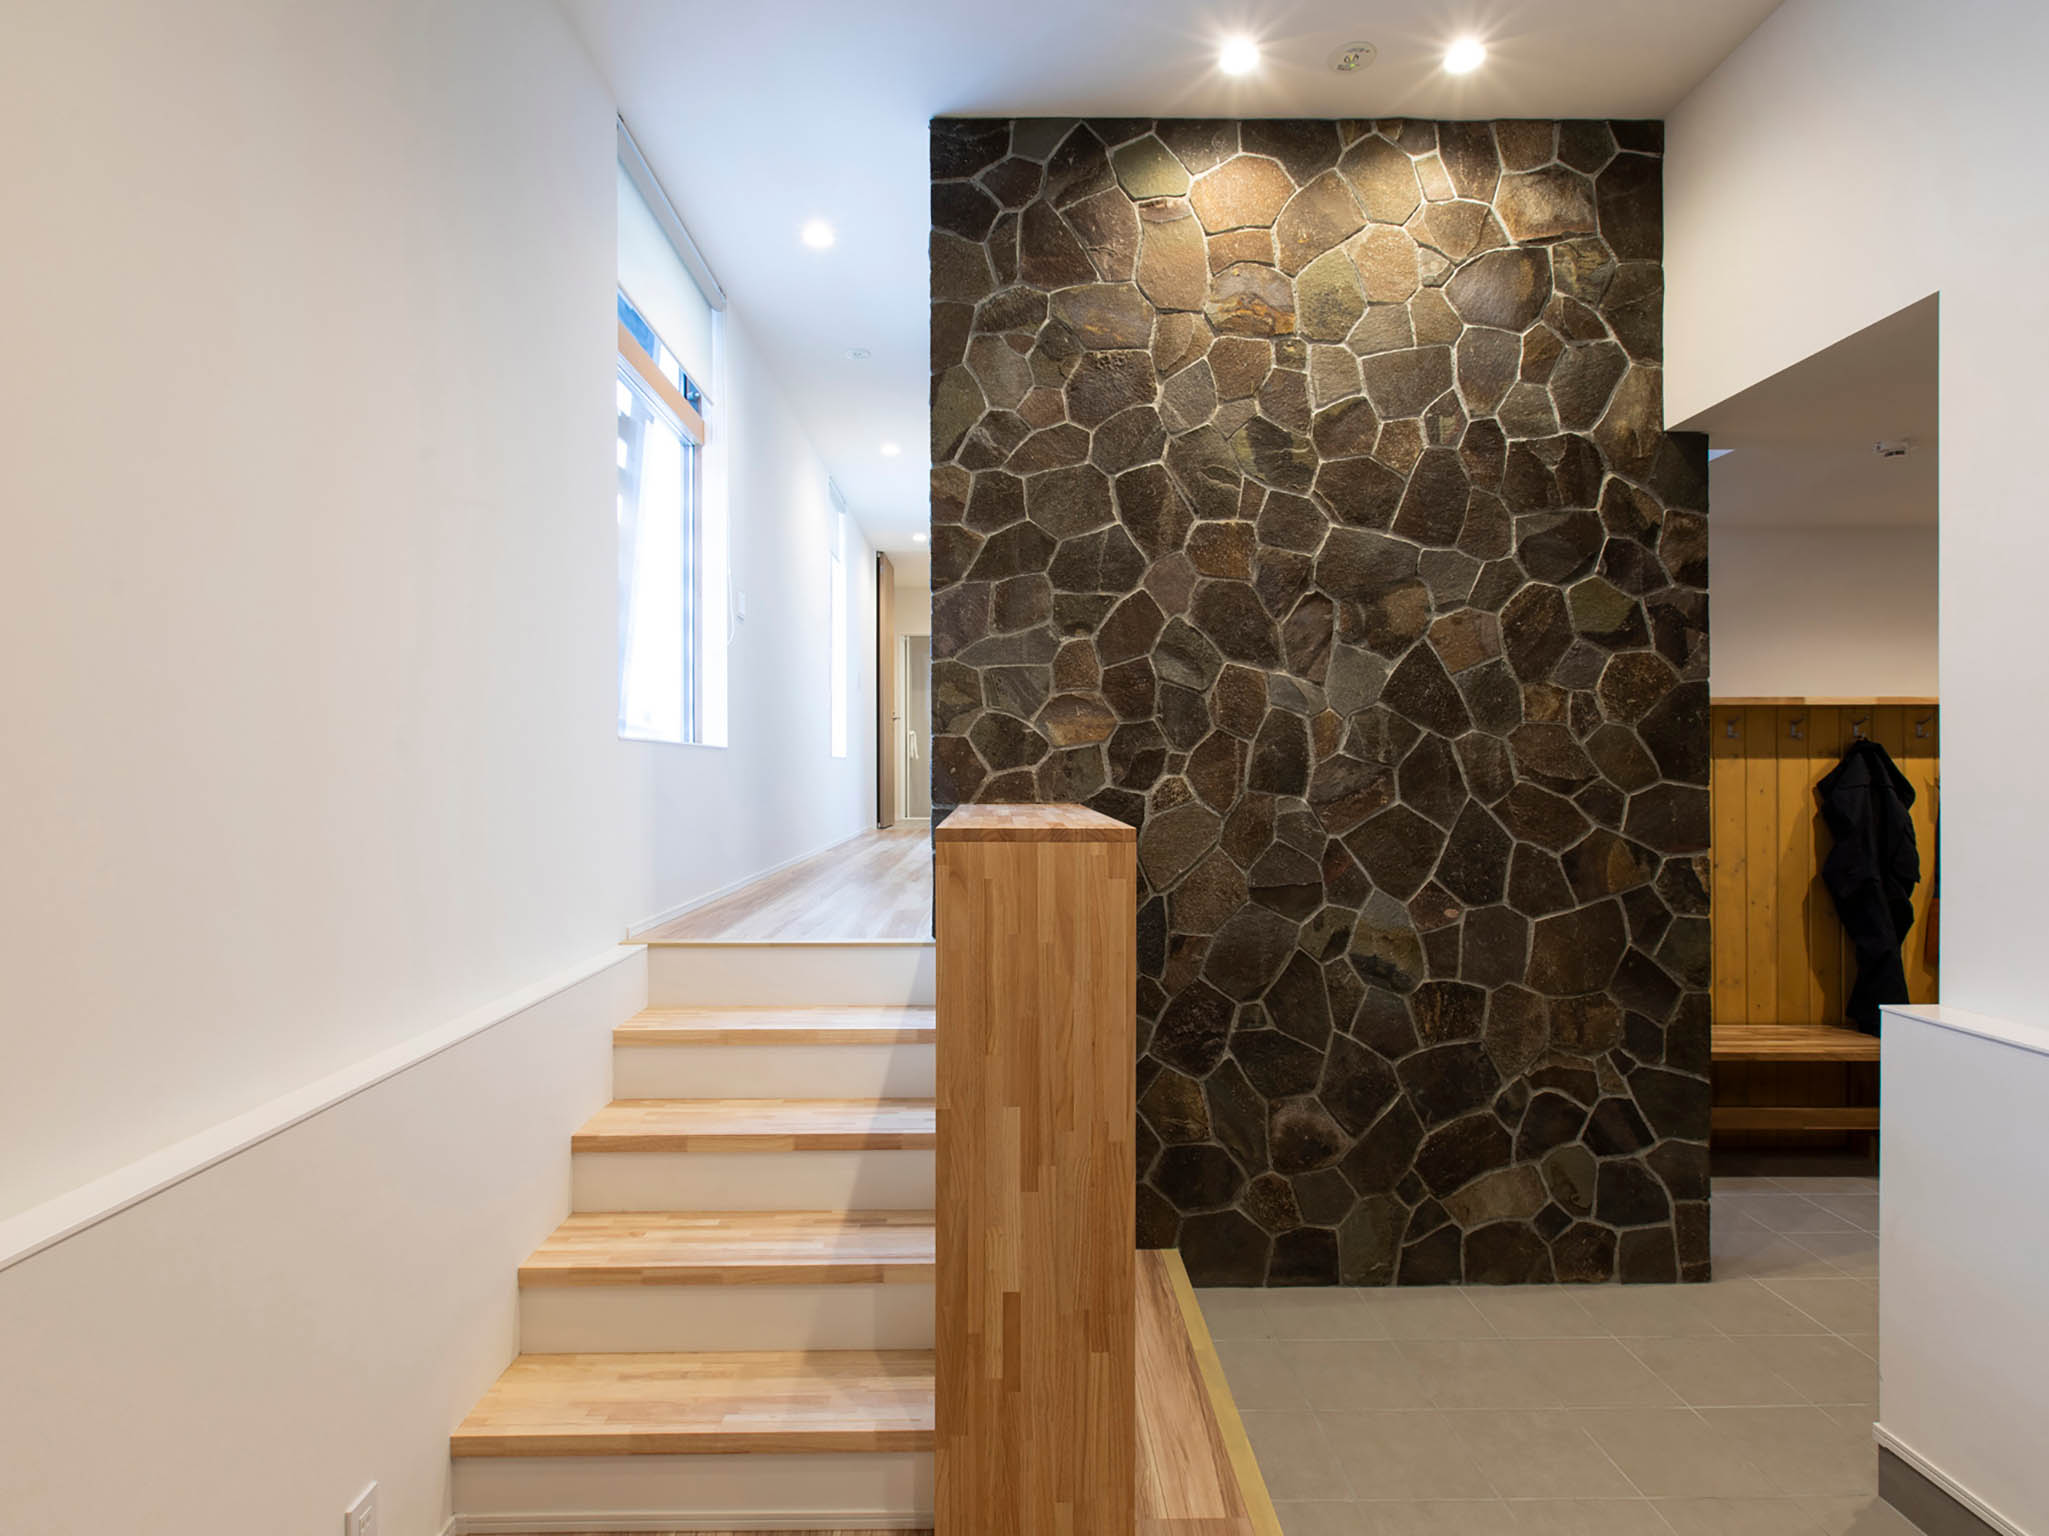 Aoyama Lodge - The stairways